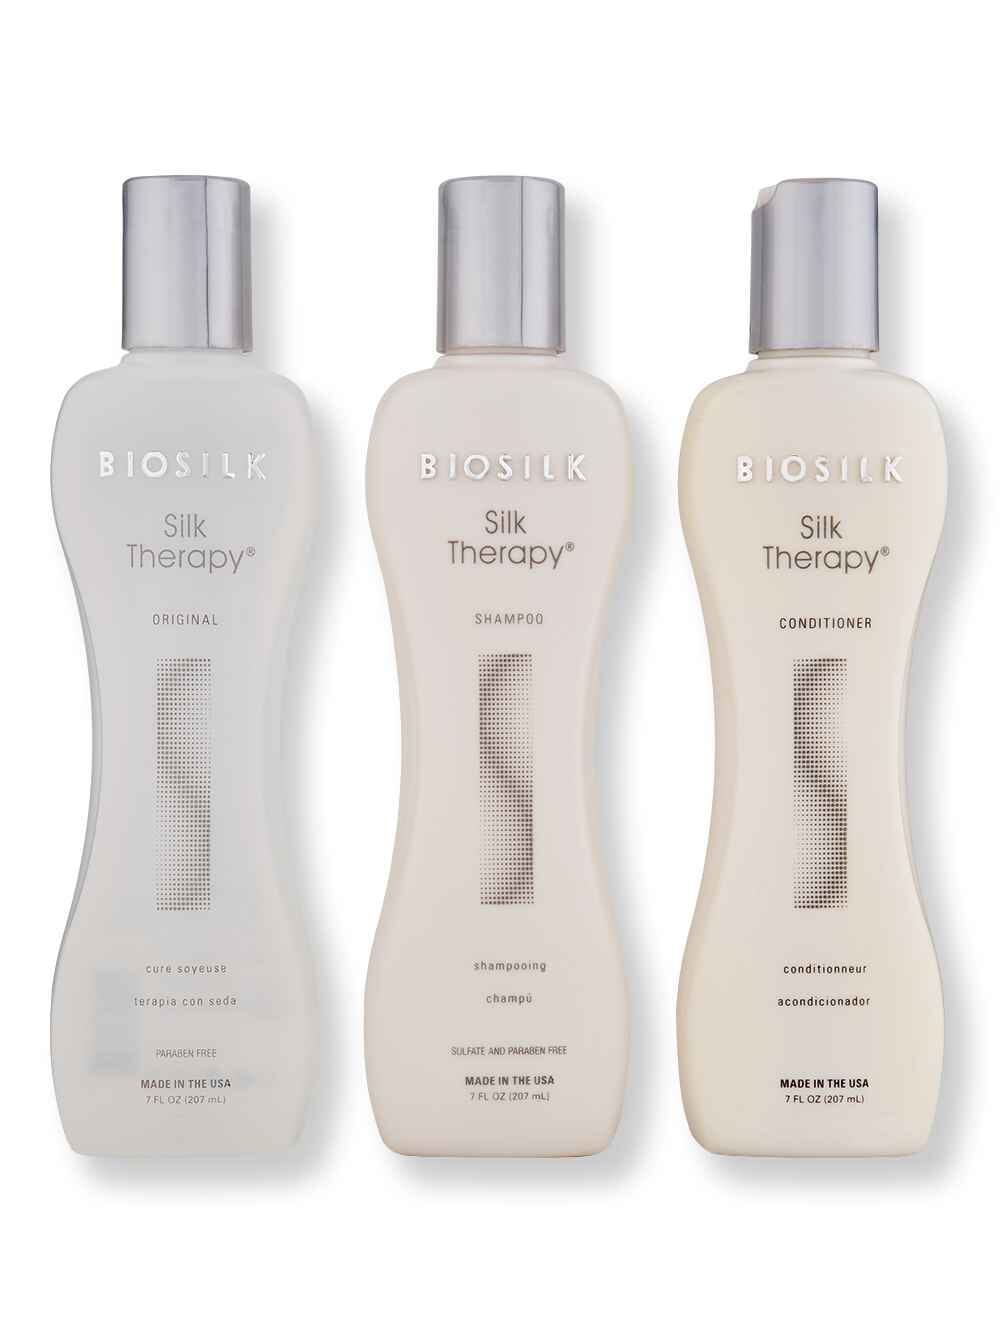 Biosilk Biosilk Silk Therapy 7oz, Shampoo 7oz, & Conditioner 7oz Hair Care Value Sets 